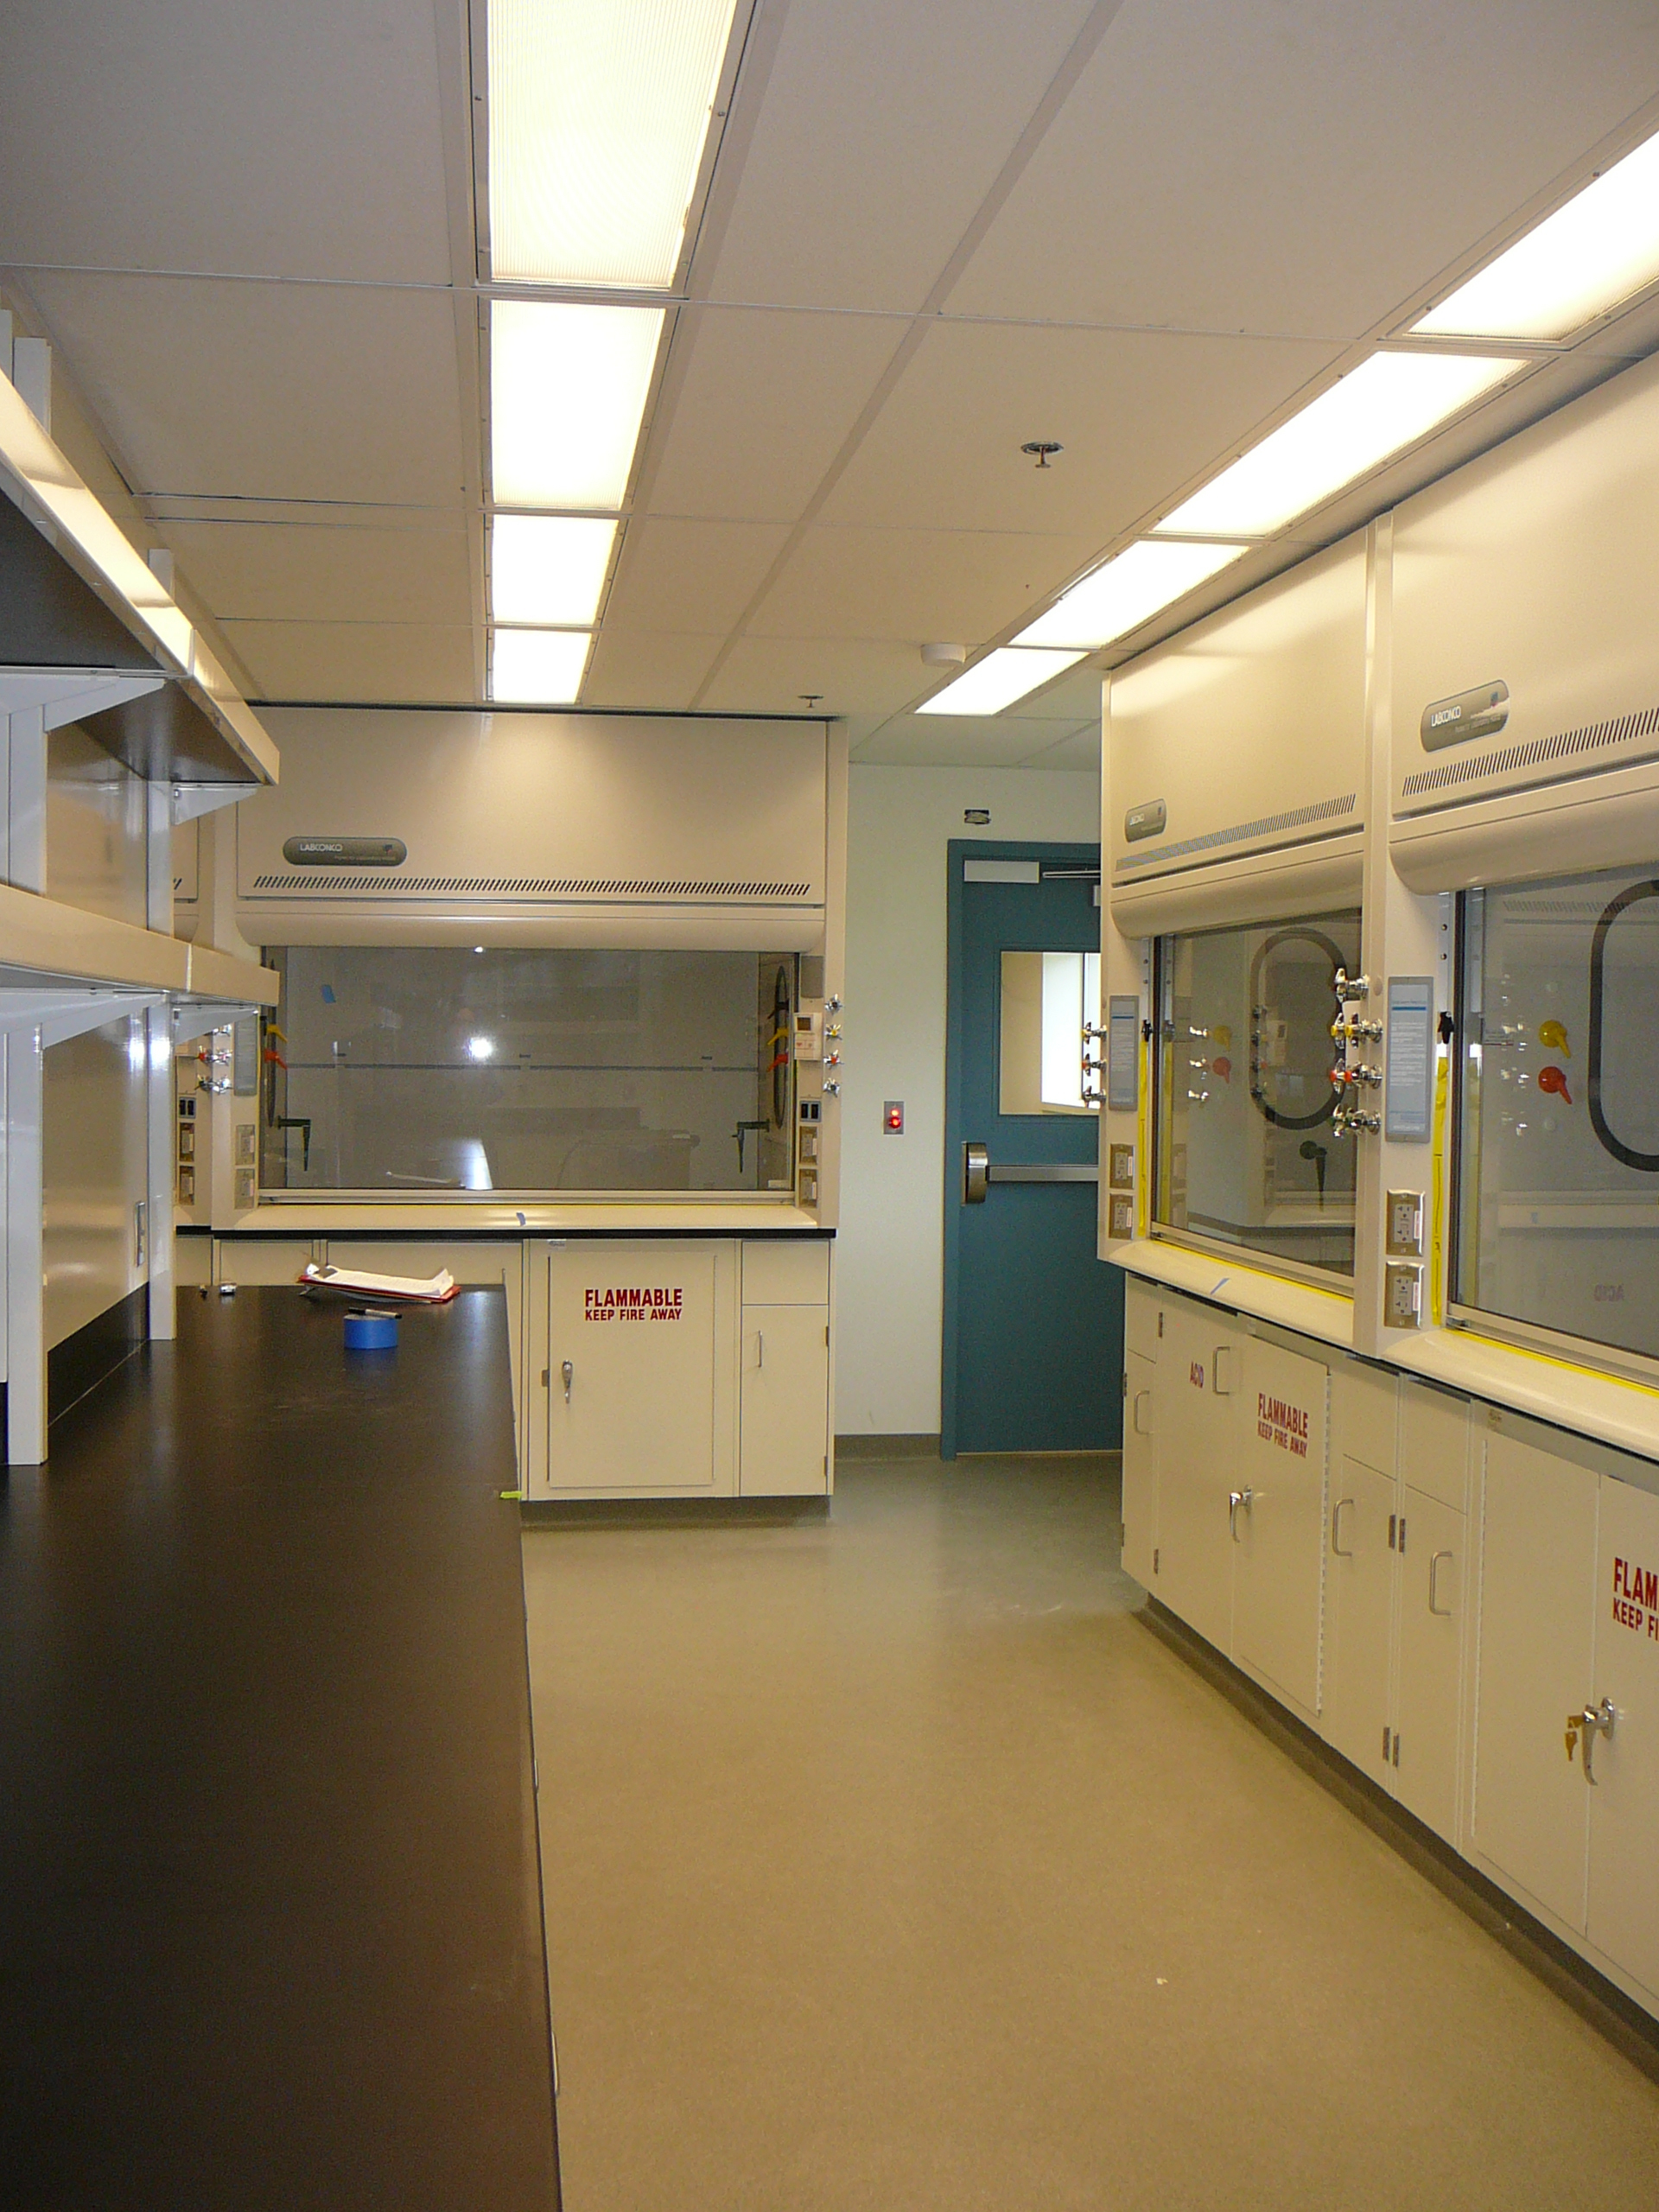 Extractions Laboratory